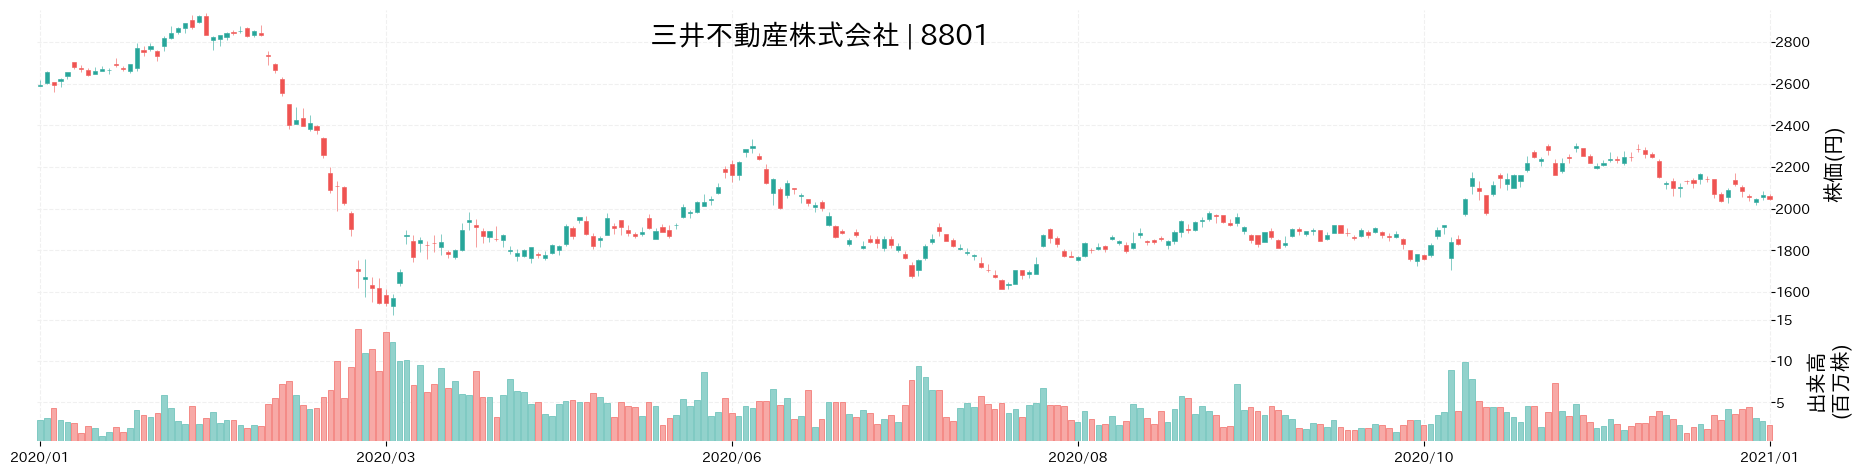 三井不動産の株価推移(2020)